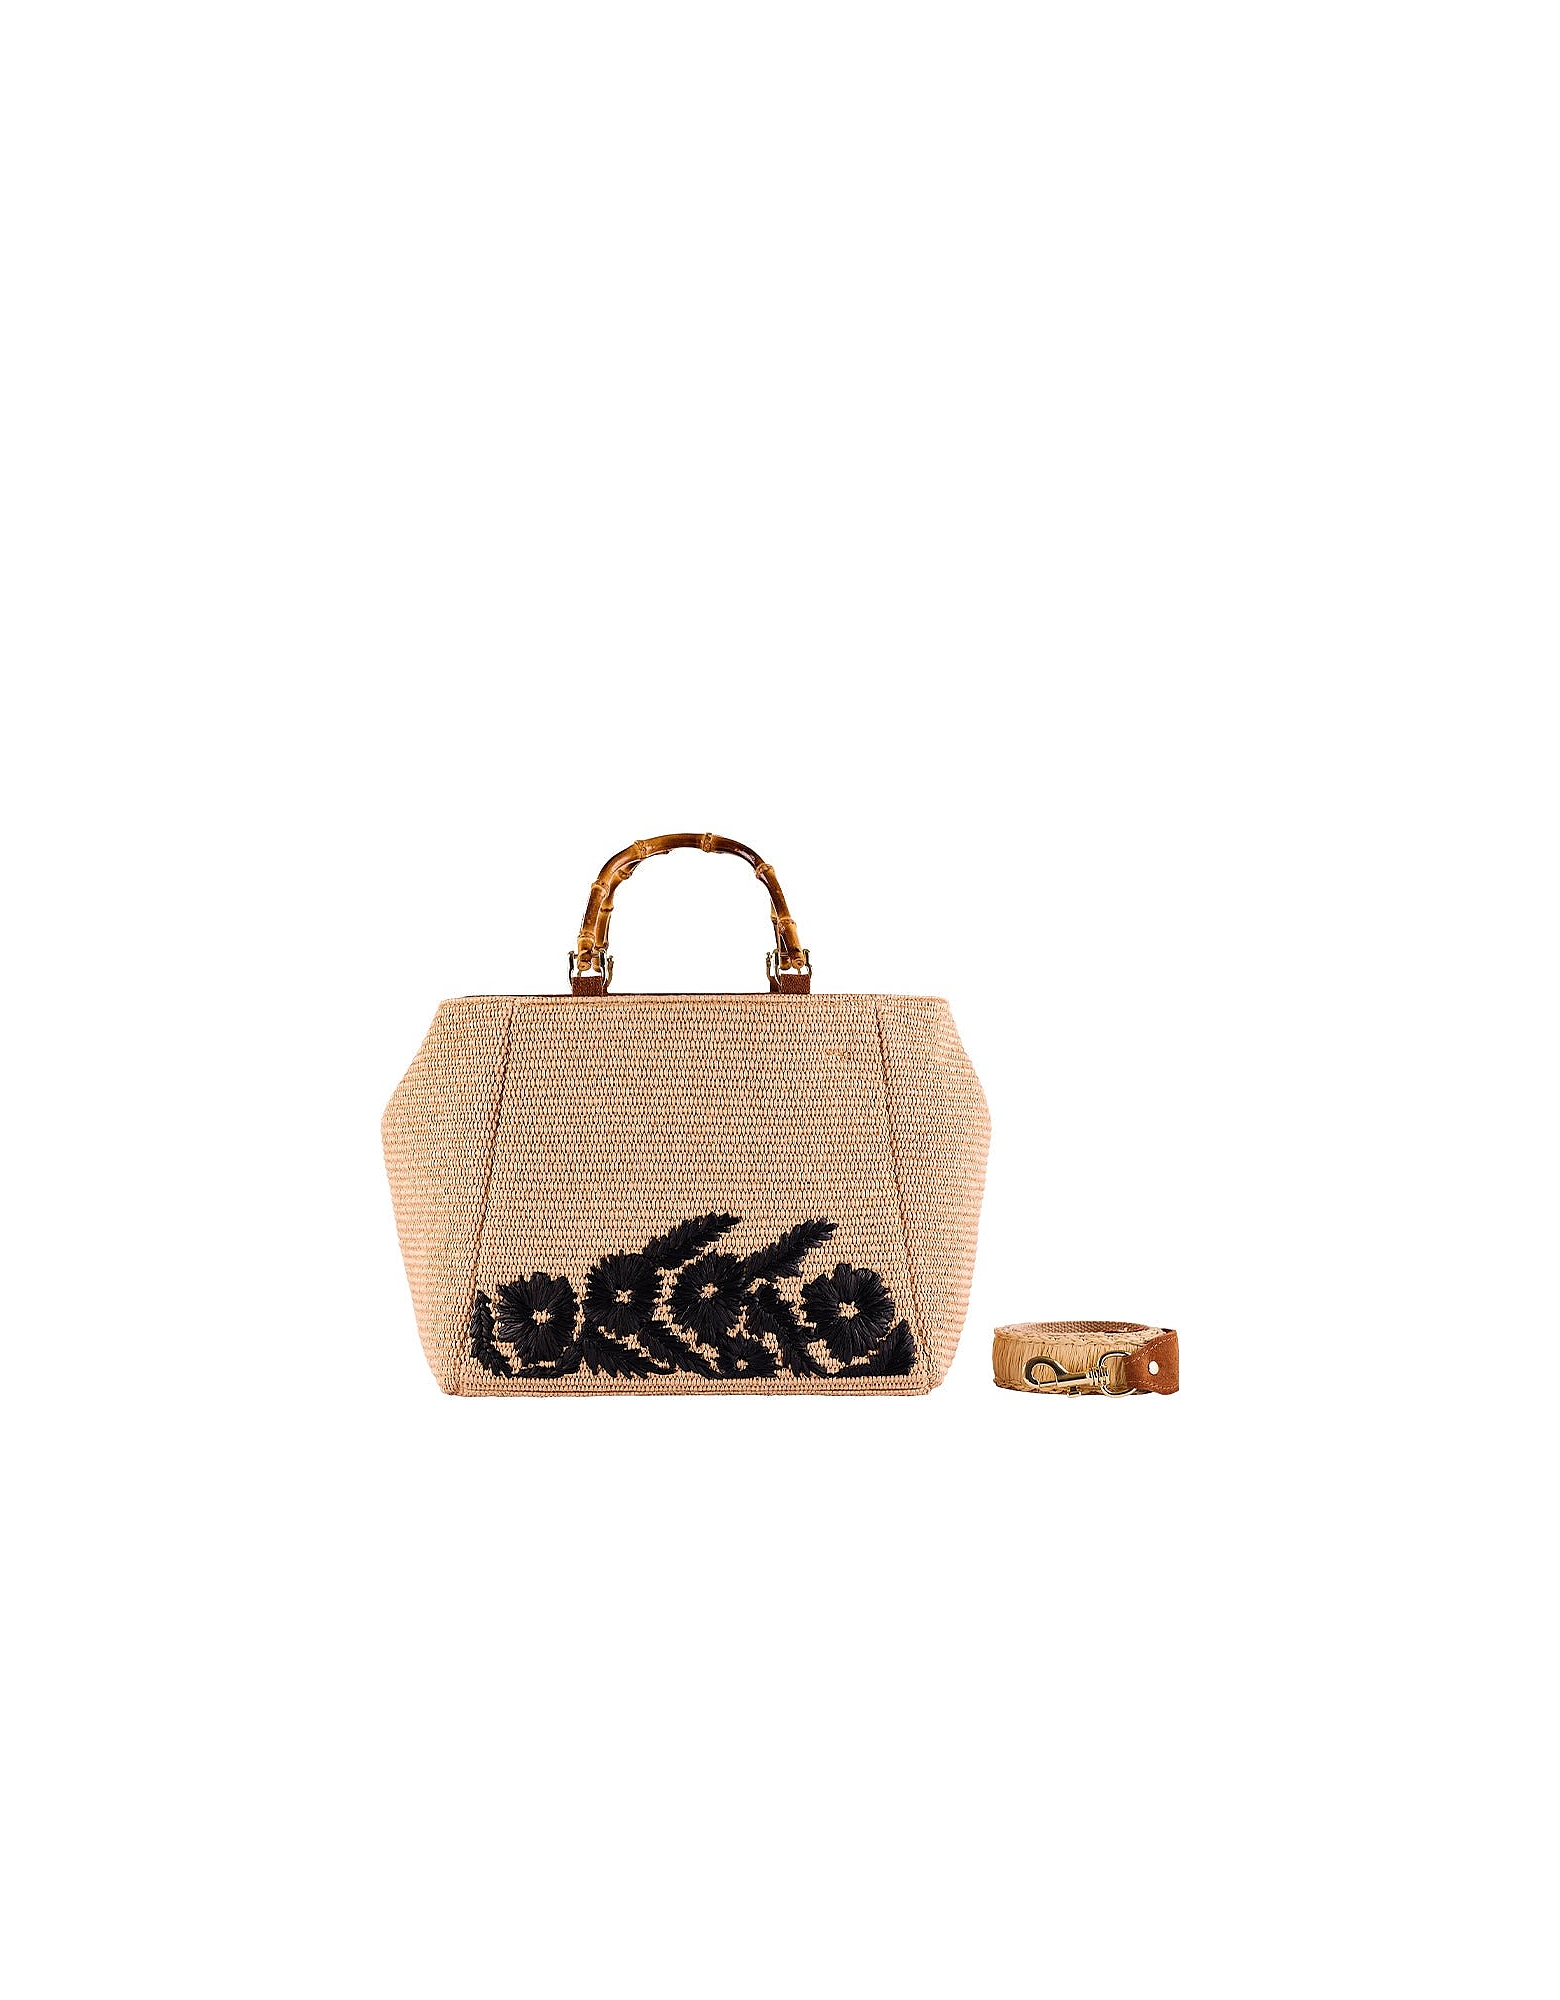 Viamailbag Designer Handbags Giava Trim - Top Handle Bag In Neutres